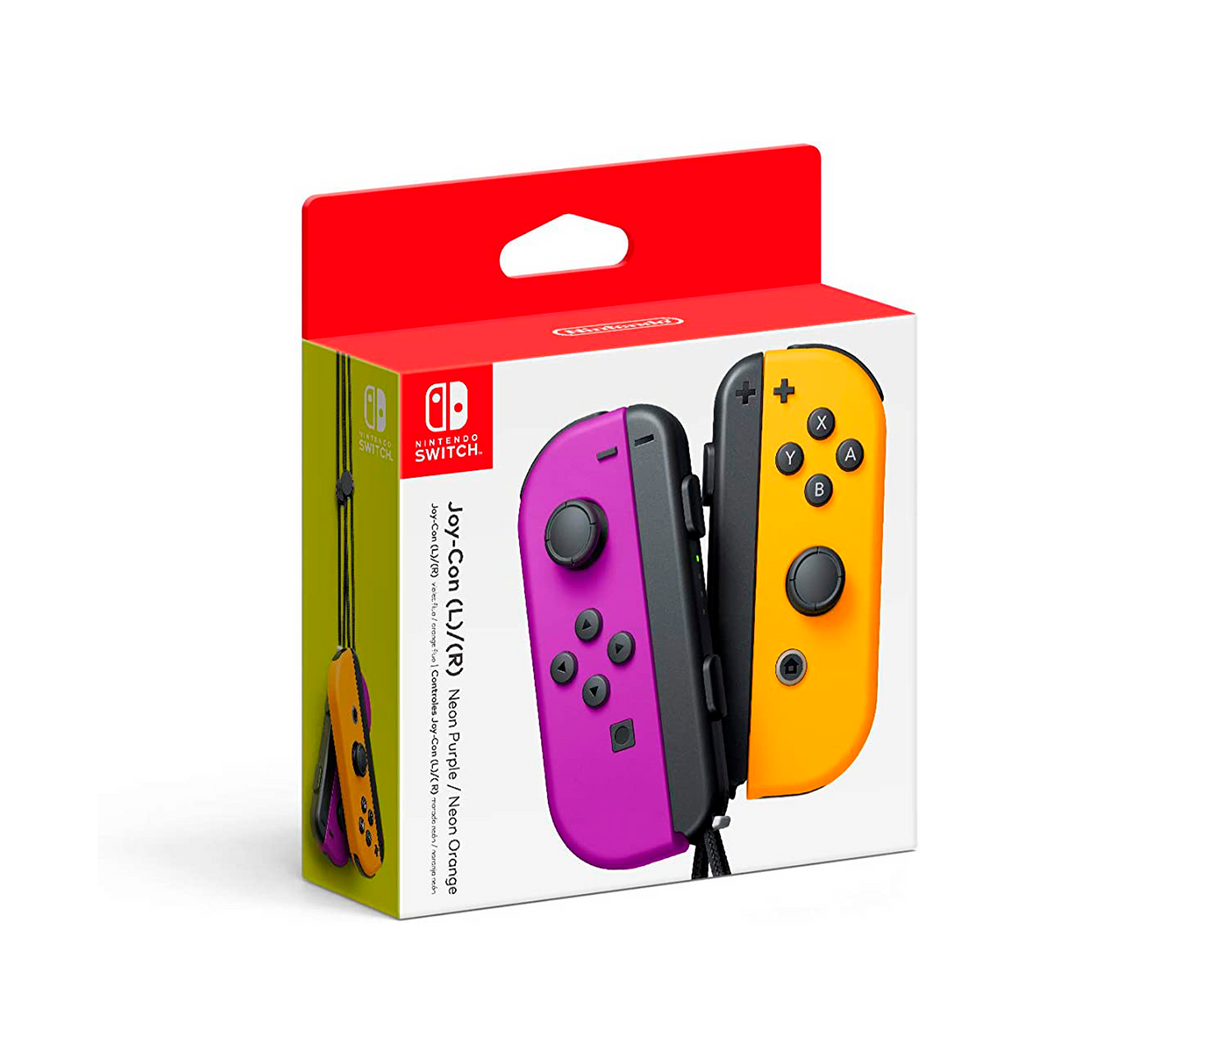 Controles Joy-Con para Nintendo Switch L&R Neon purple/orange Nintendo